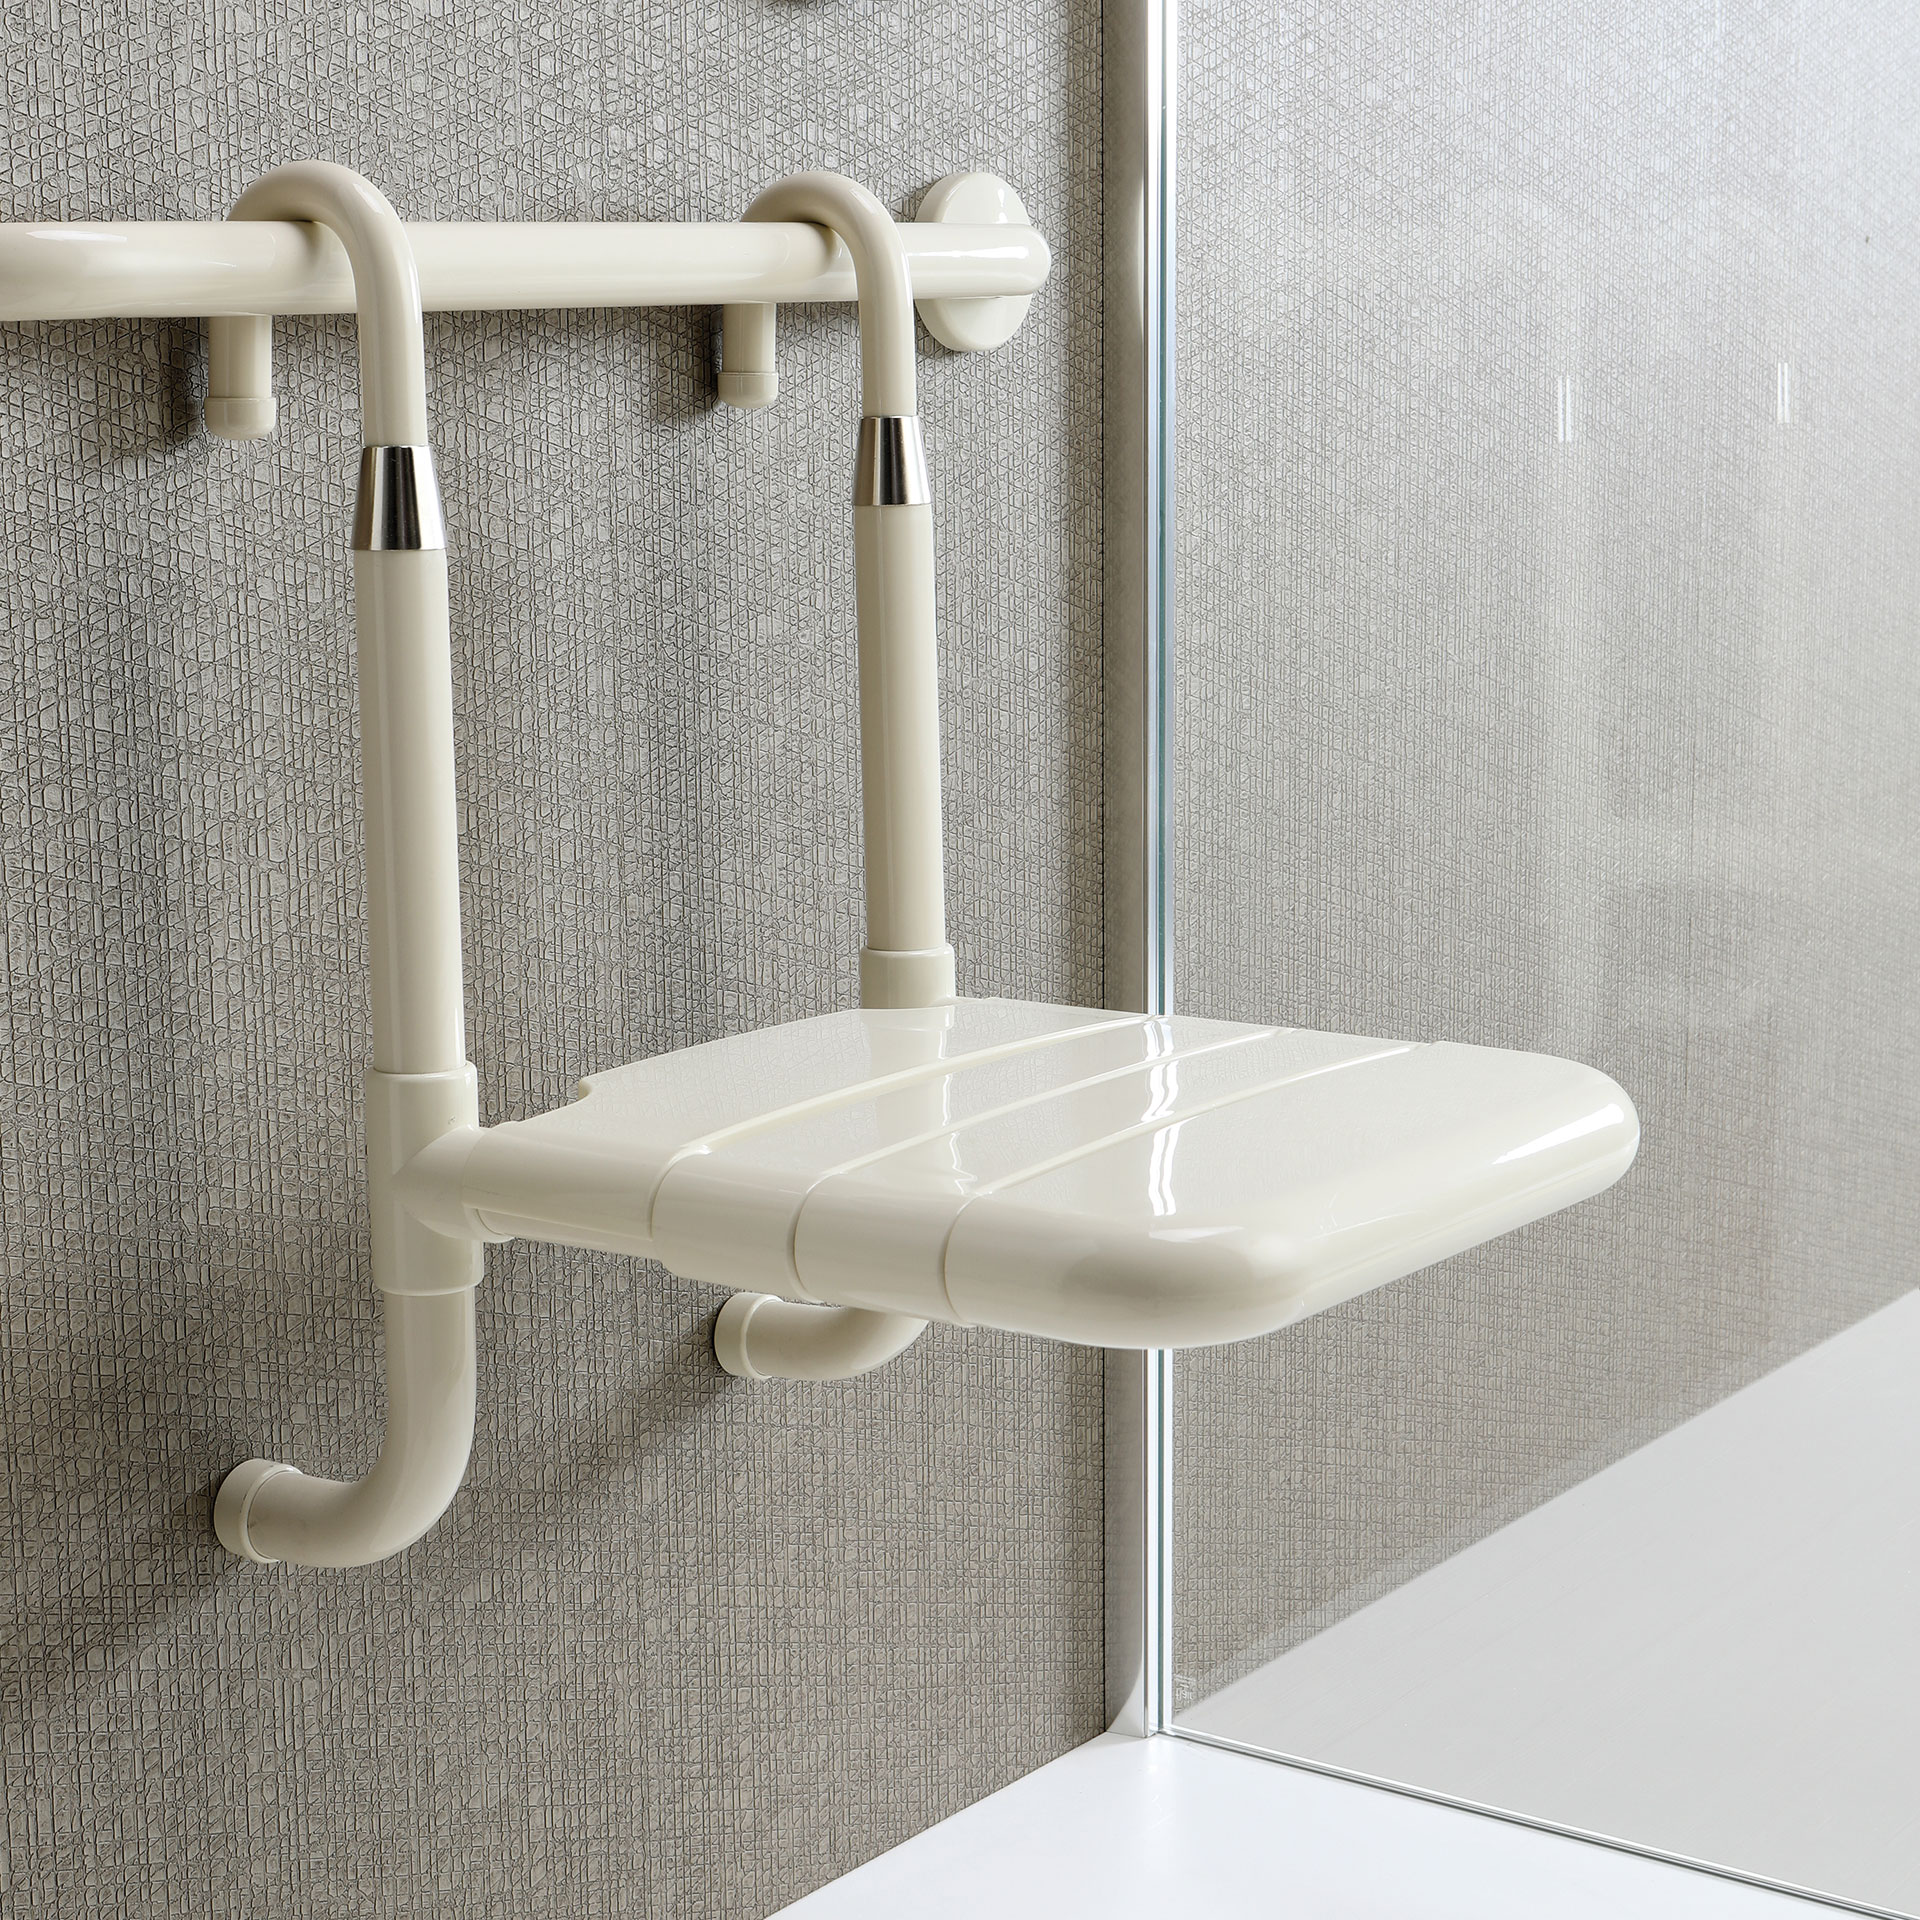 Hug stool, shower solutions for a safe bathroom